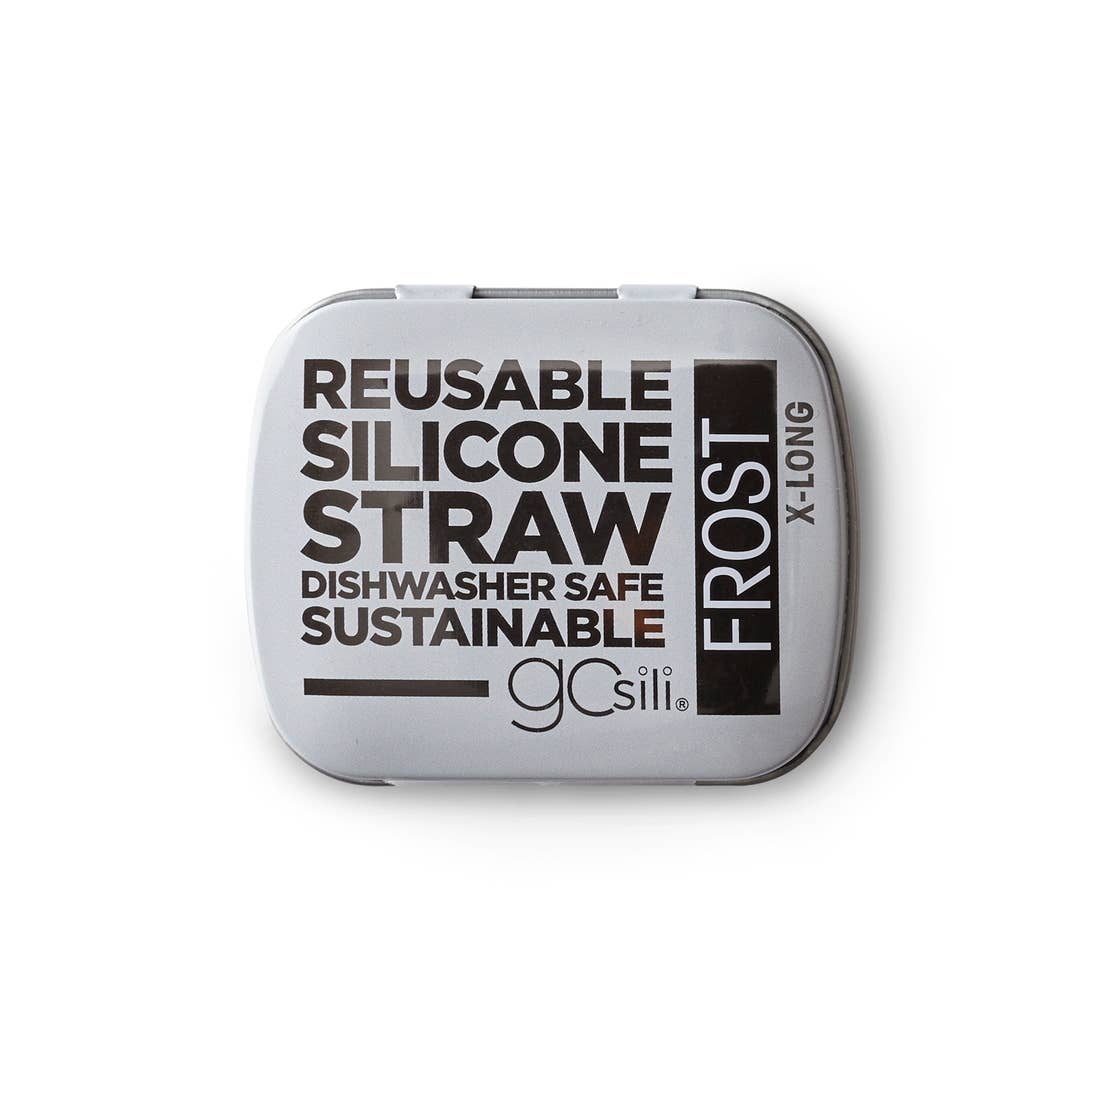 15 Best Reusable Straws 2021